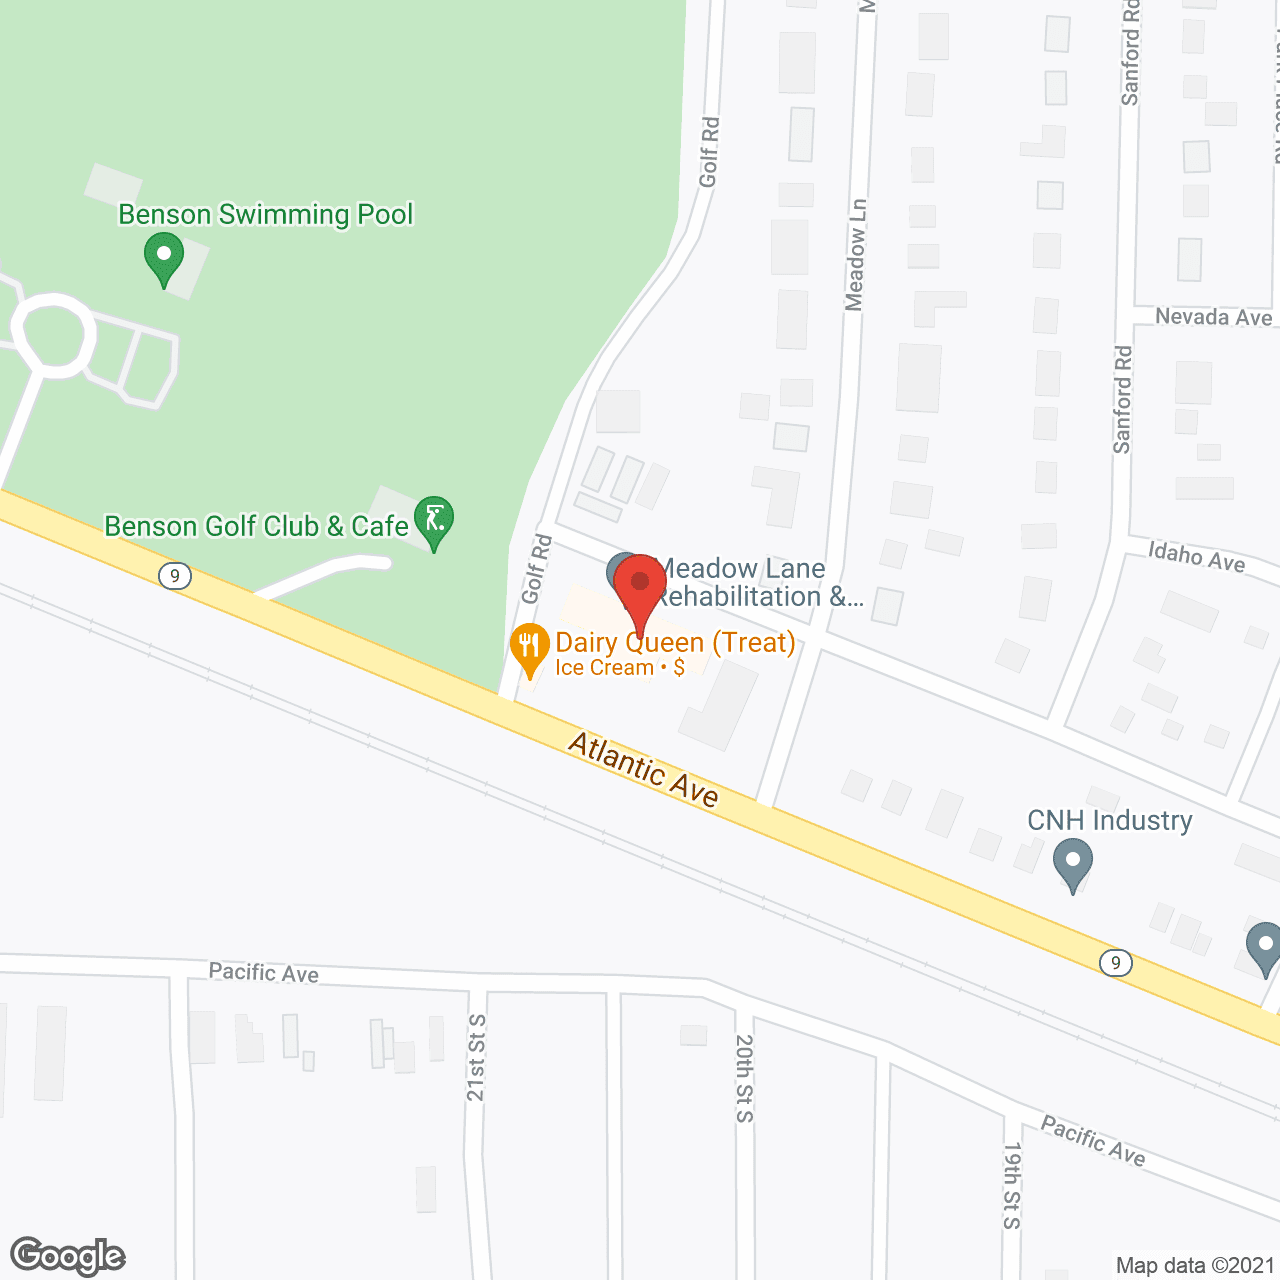 Meadow Lane Healthcare Center in google map